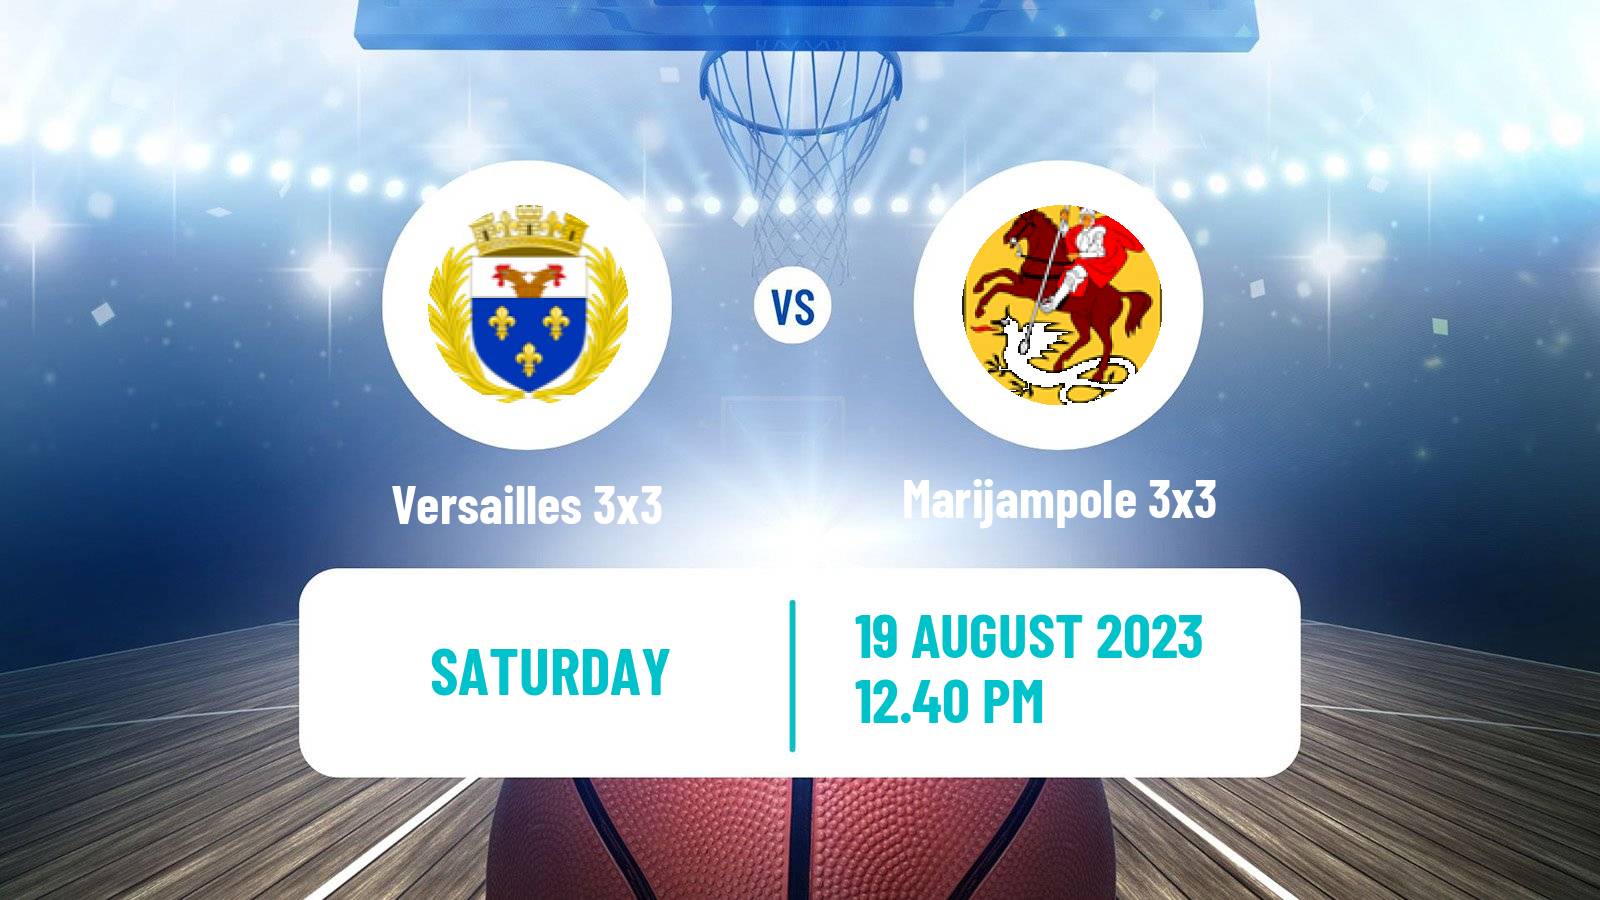 Basketball World Tour Lausanne 3x3 Versailles 3x3 - Marijampole 3x3